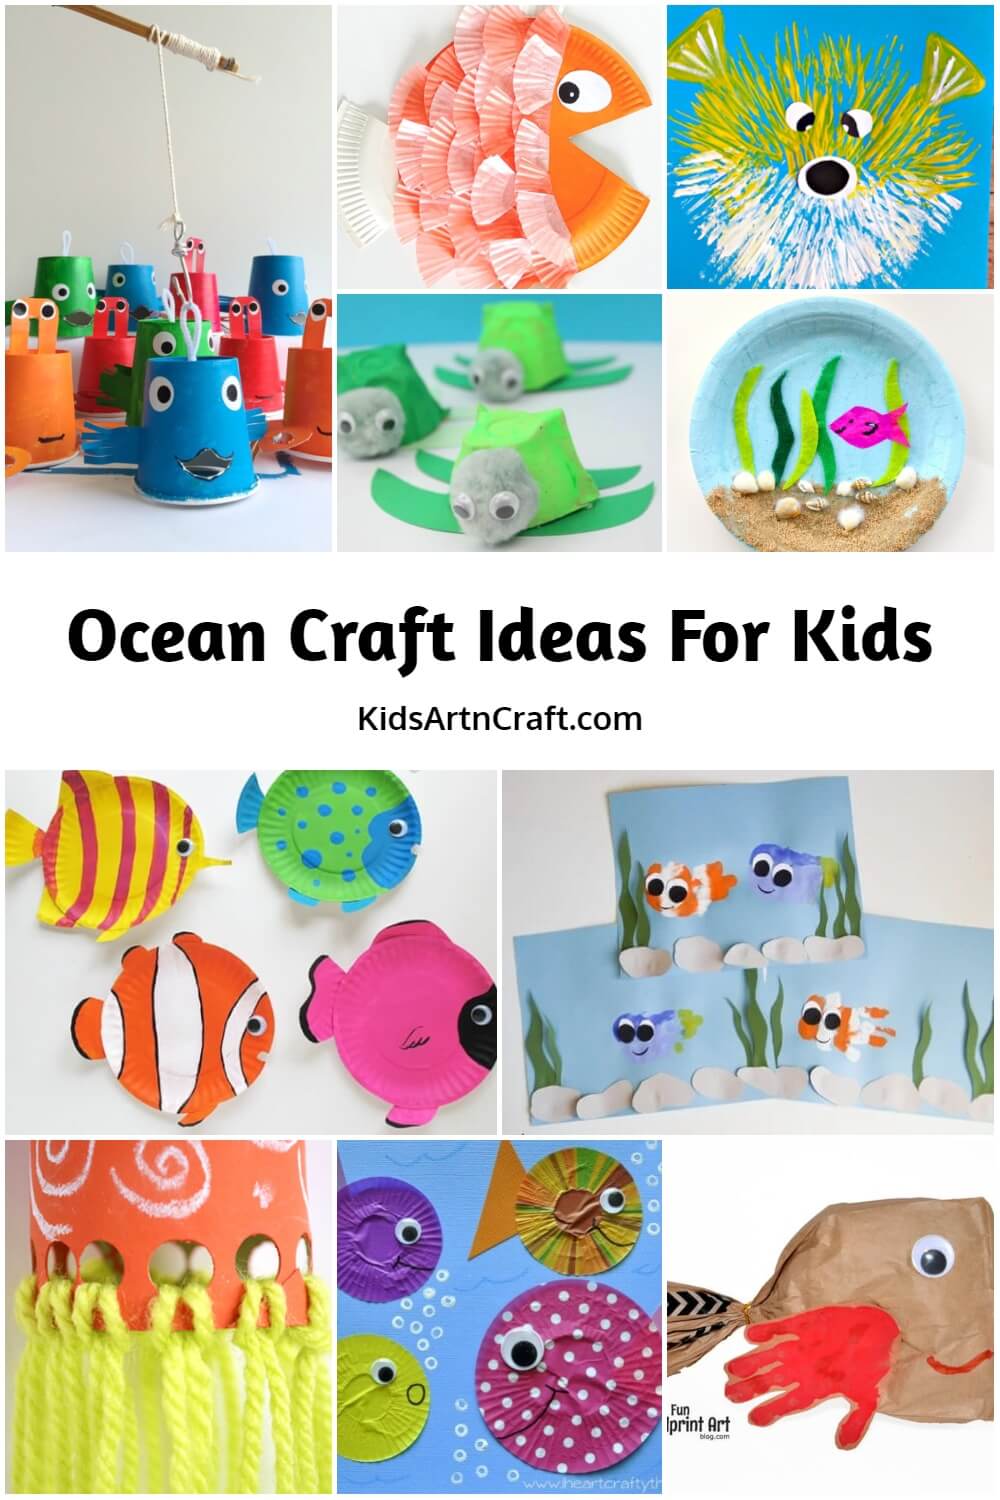 Ocean Craft Ideas For Kids